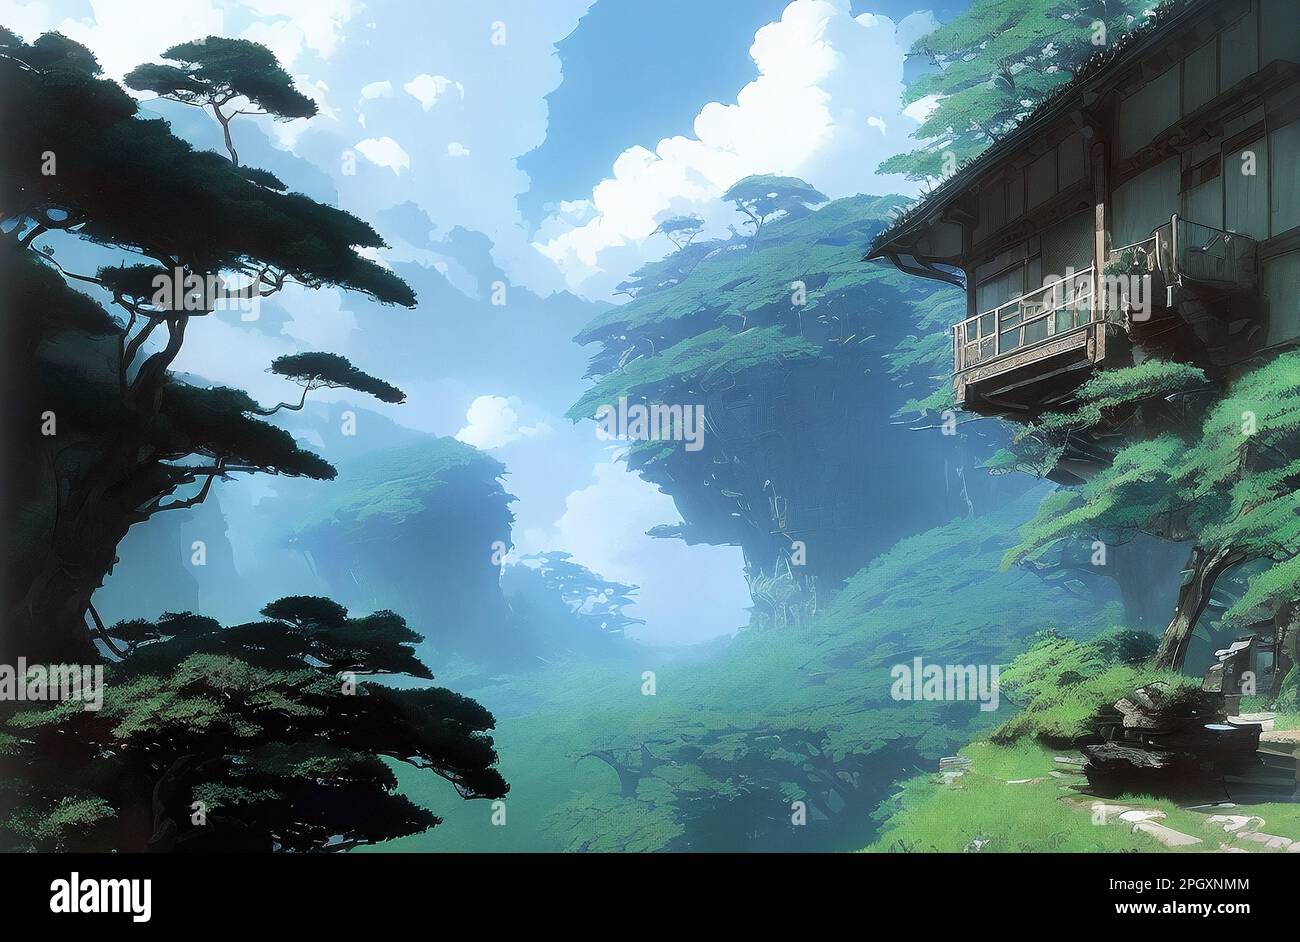 Anime Forest Background  Anime scenery, Anime background, Anime